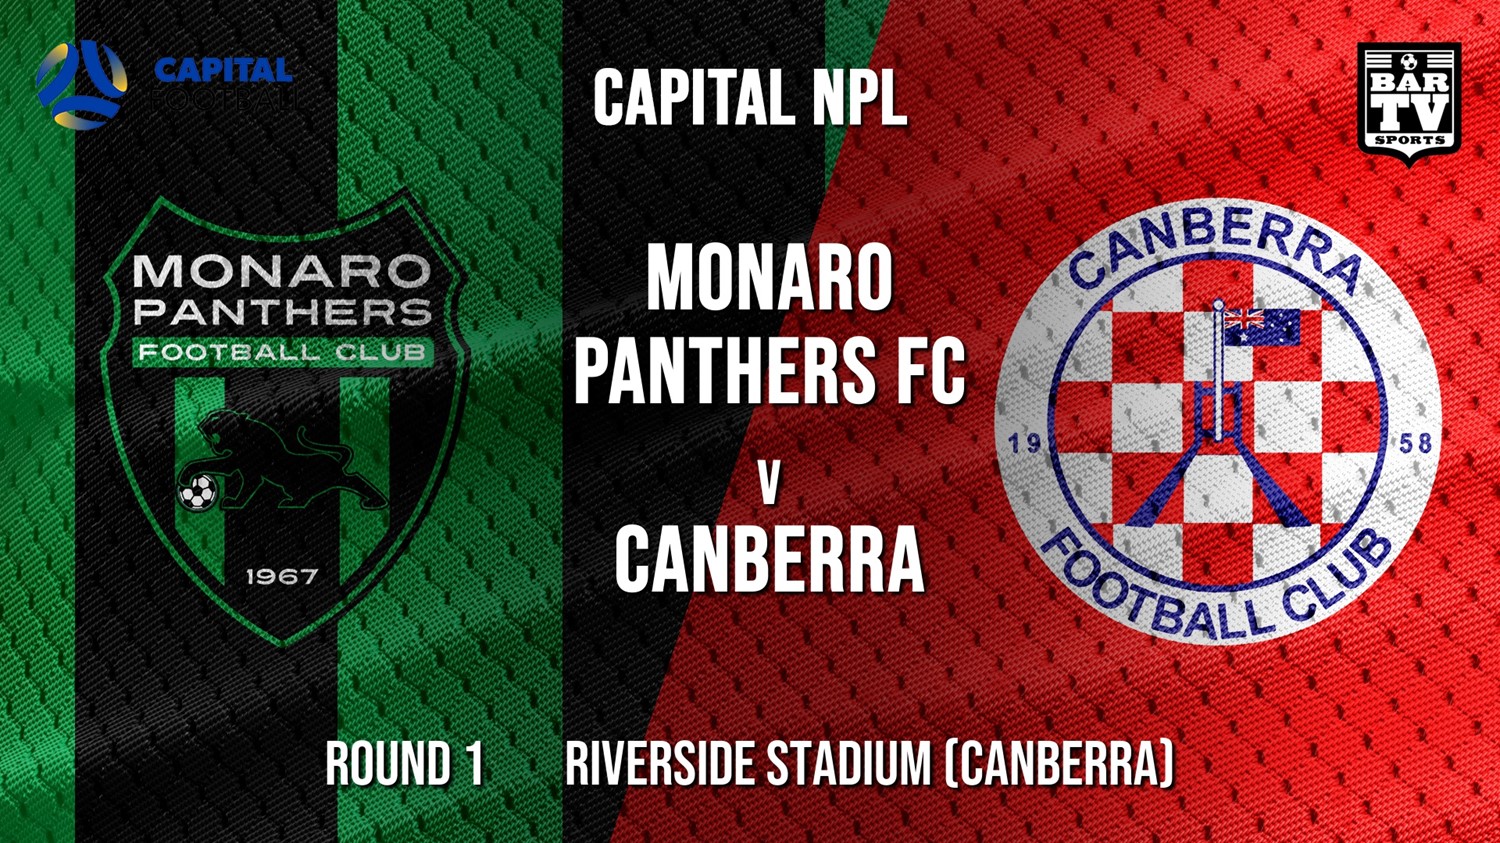 NPL - Capital Round 1 - Monaro Panthers FC v Canberra FC Minigame Slate Image